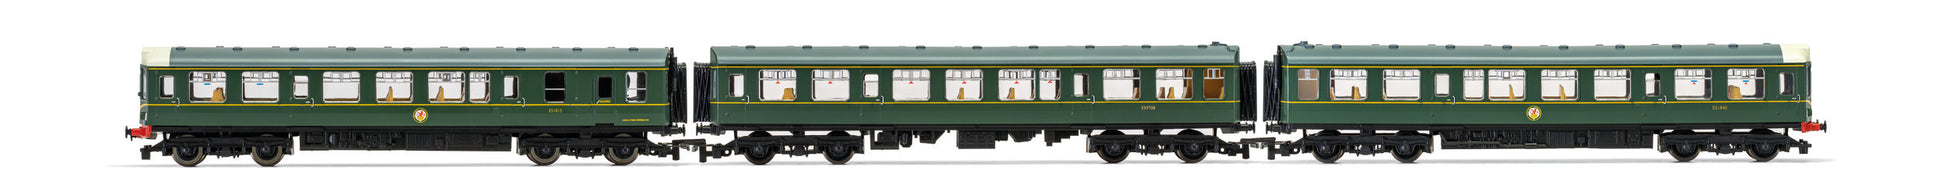 Hornby R30170 Railroad Plus BR, Class 110 3 Car Train Pack - Era 6 - Chester Model Centre